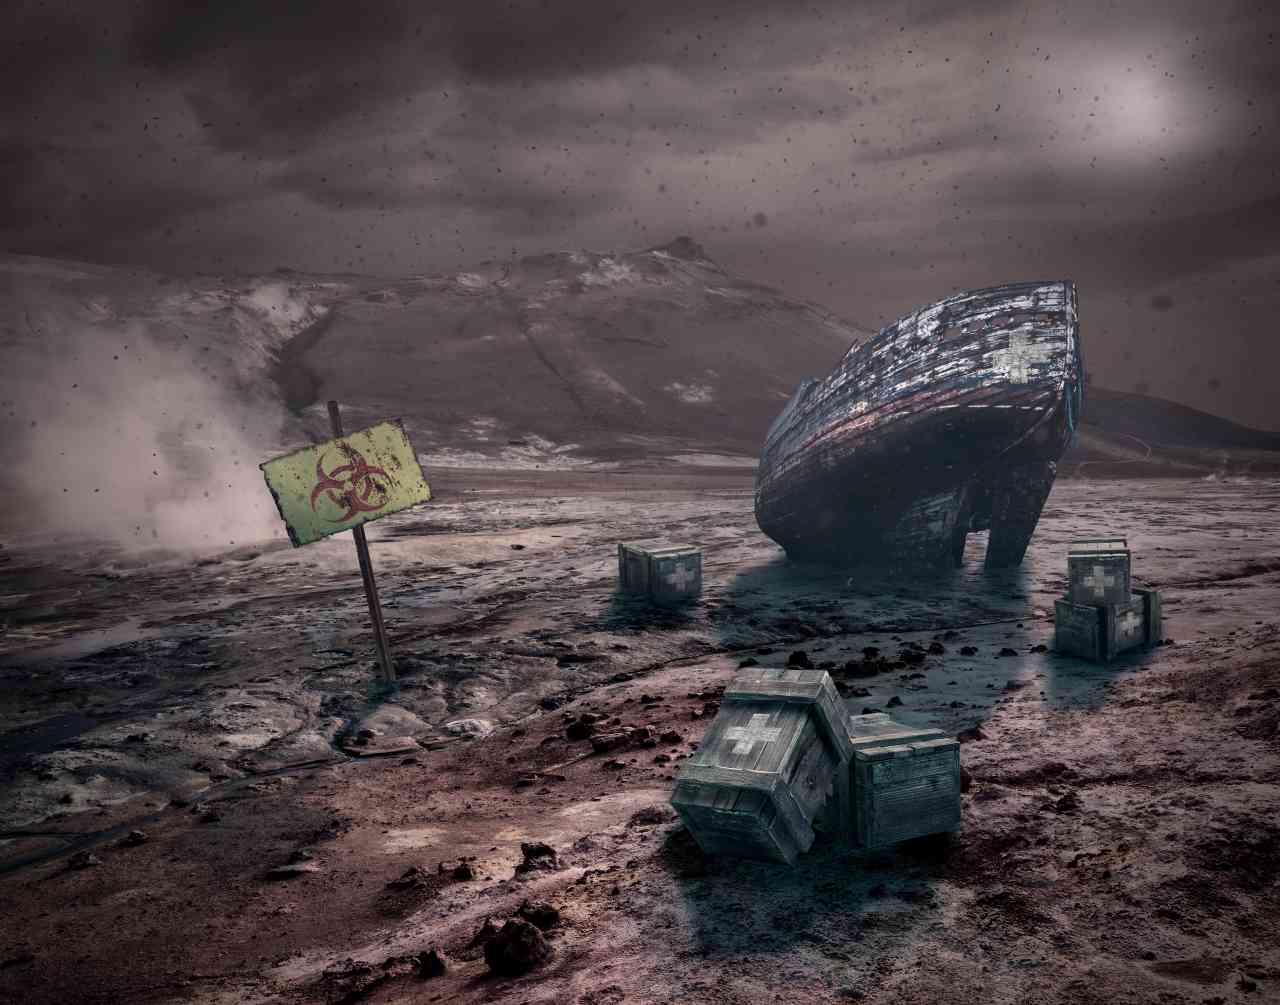 ship-on-dry-lake-vision-of-world-in-2050-year-2022-04-04-23-02-02-utc_s.jpg